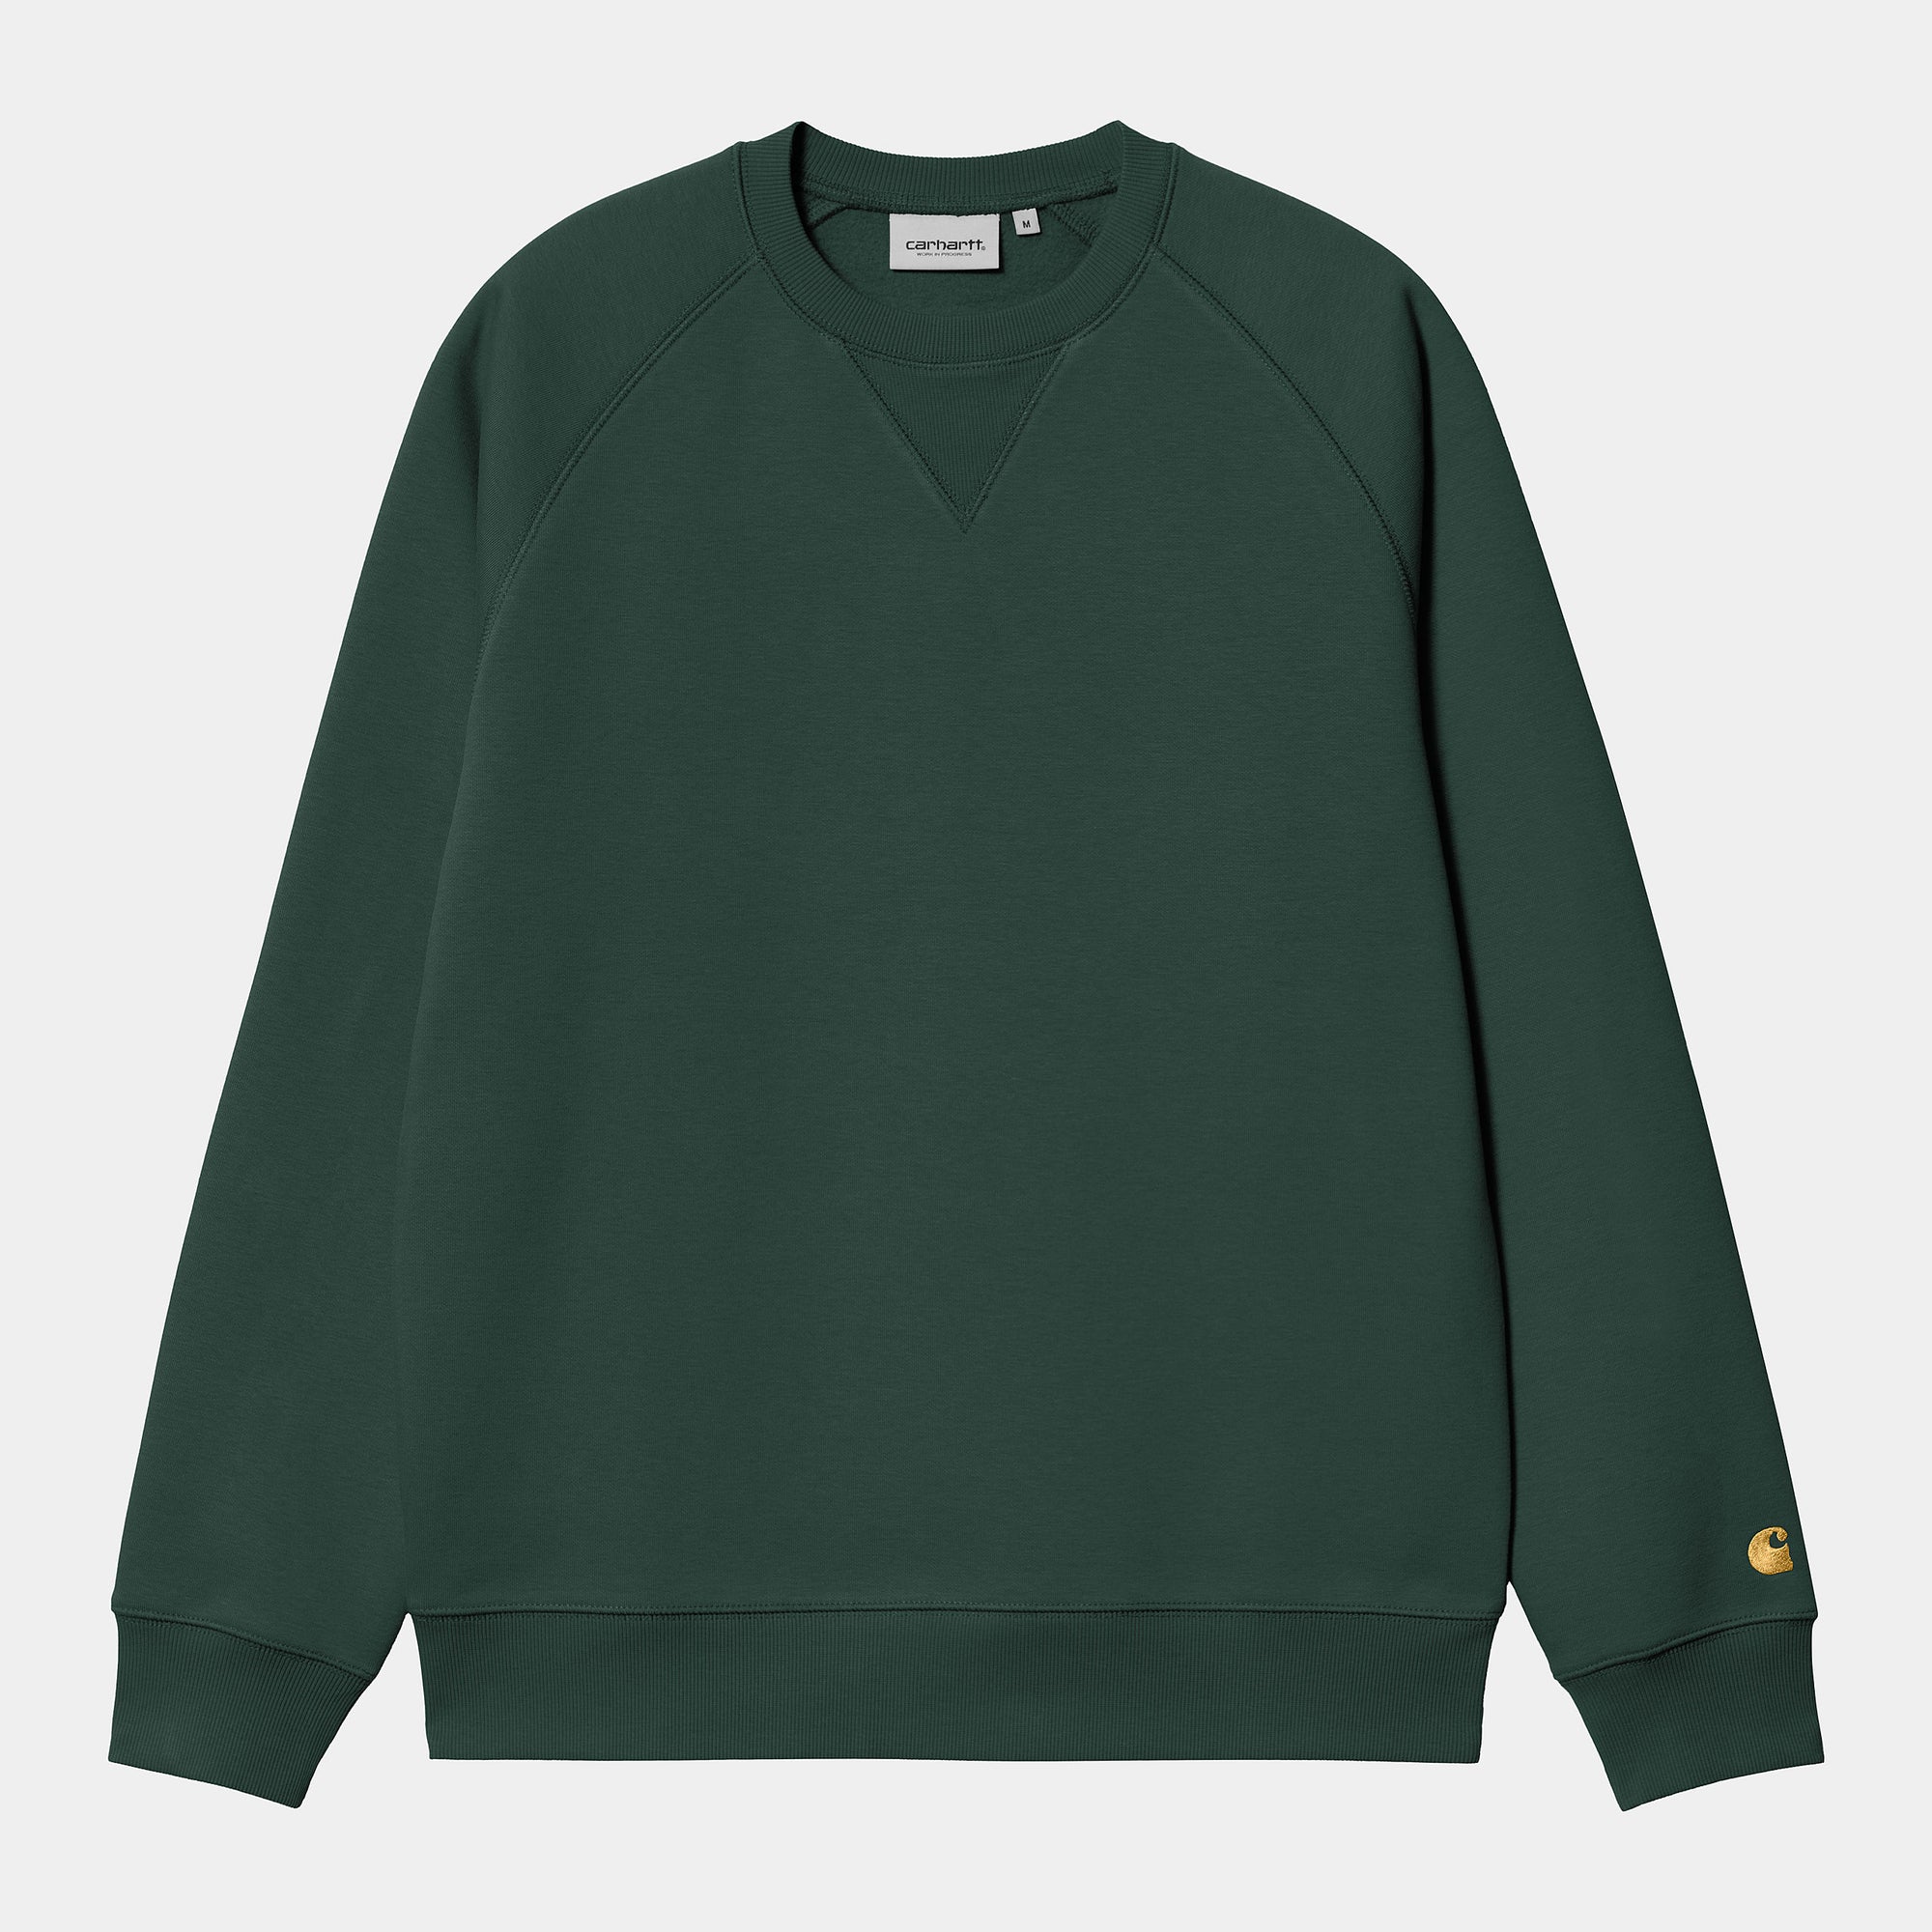 Carhartt WIP - Chase Crewneck Sweatshirt - Discovery Green / Gold